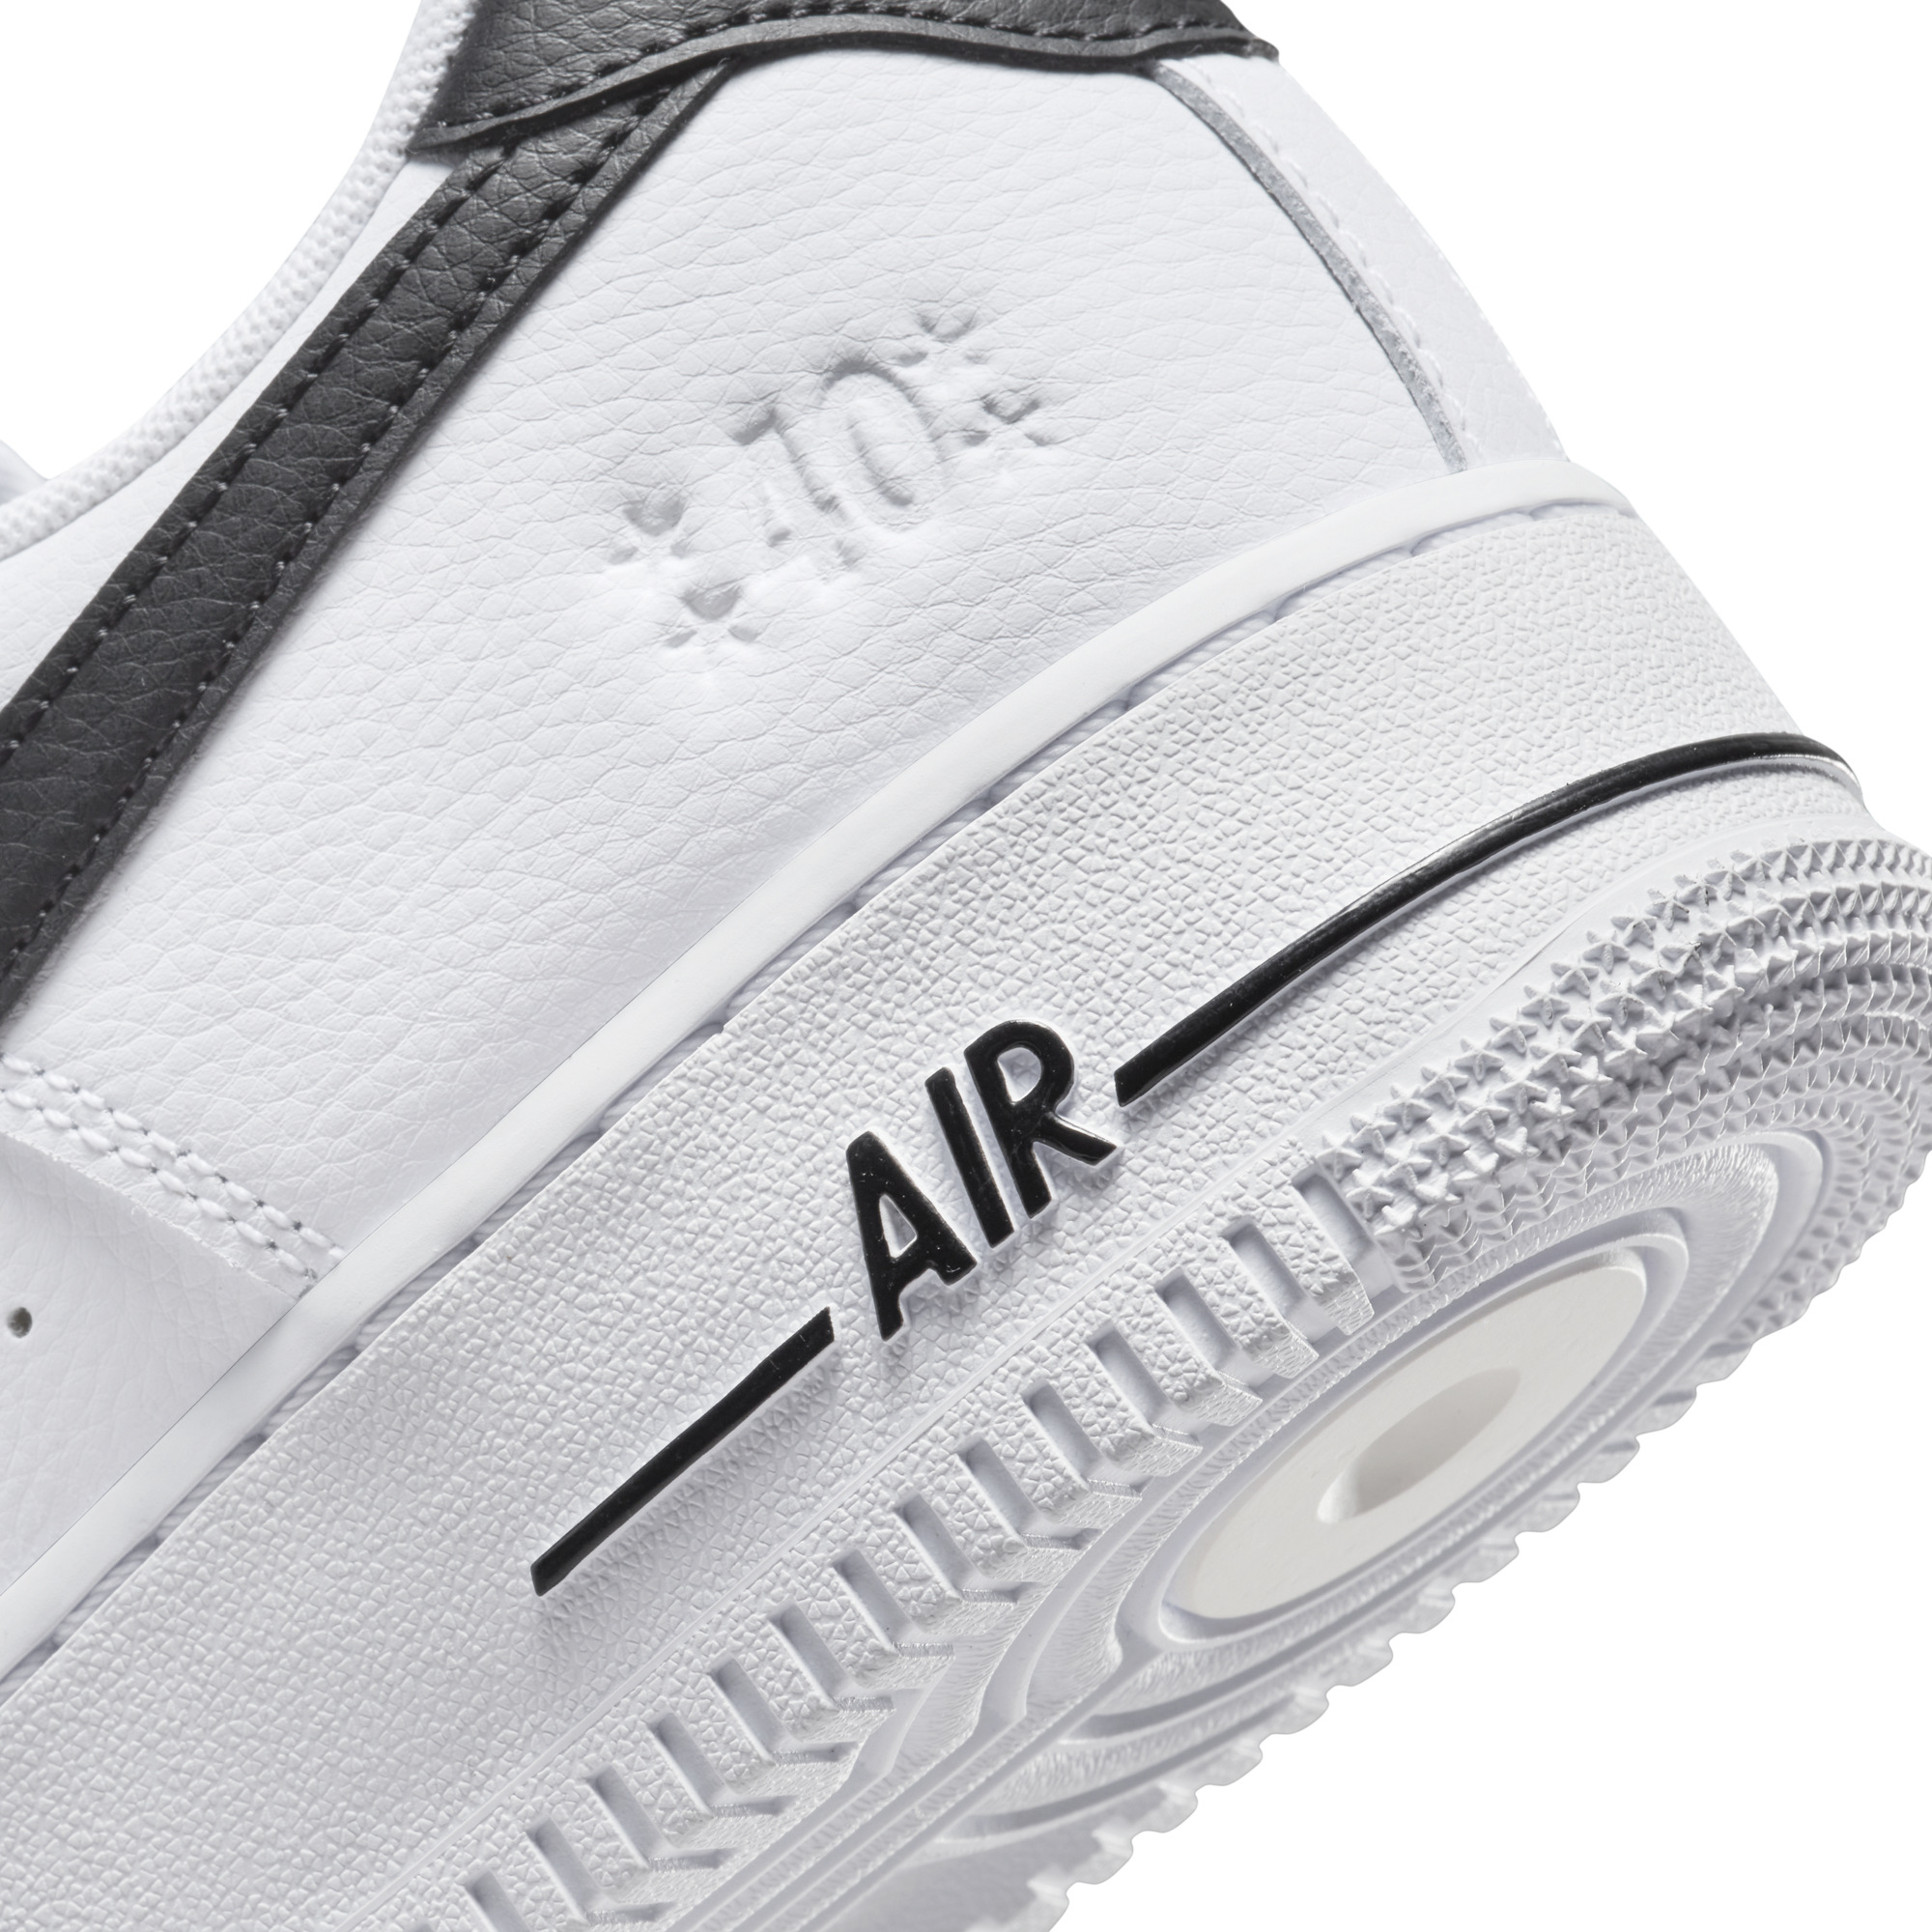  Nike Air Force 1 07 LV8 40th Anniversary White/Black